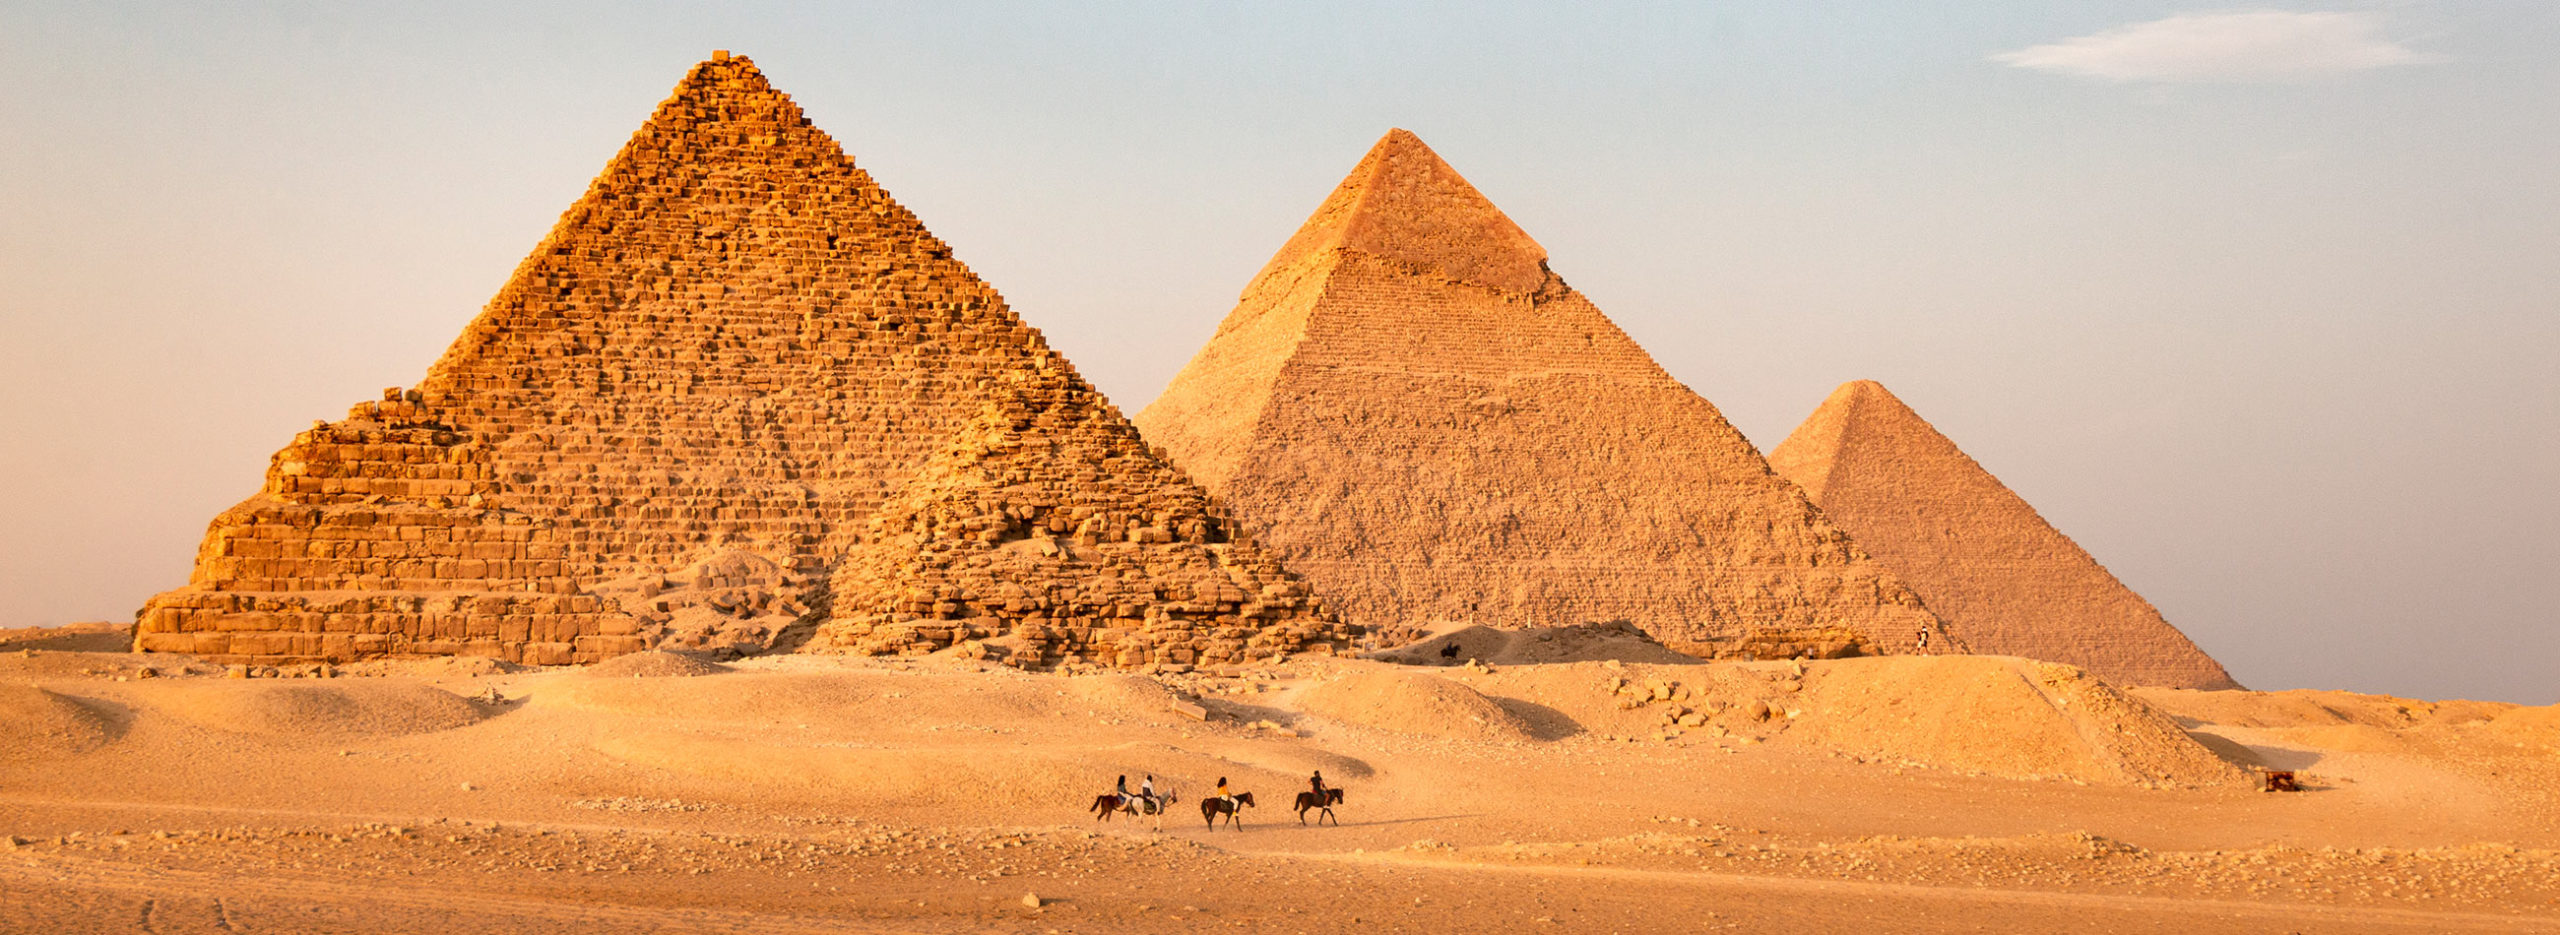 Pyramides de Gizeh, Égypte / Pyramids of Gizeh, Egypt